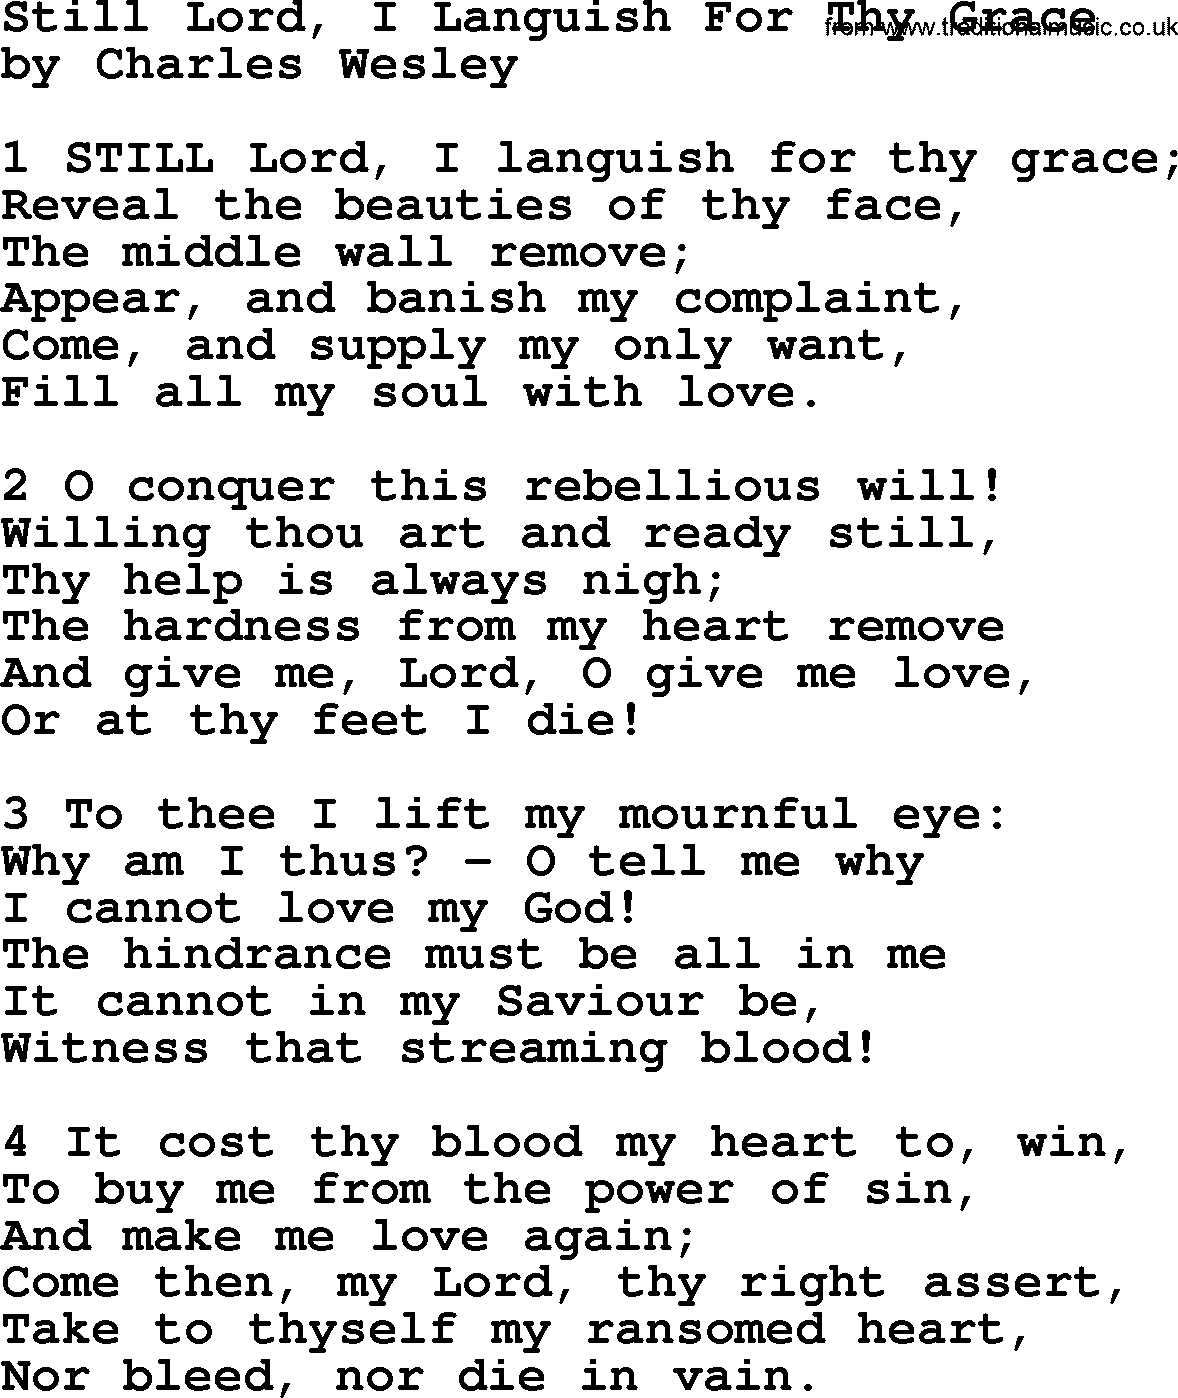 Charles Wesley hymn: Still Lord, I Languish For Thy Grace, lyrics